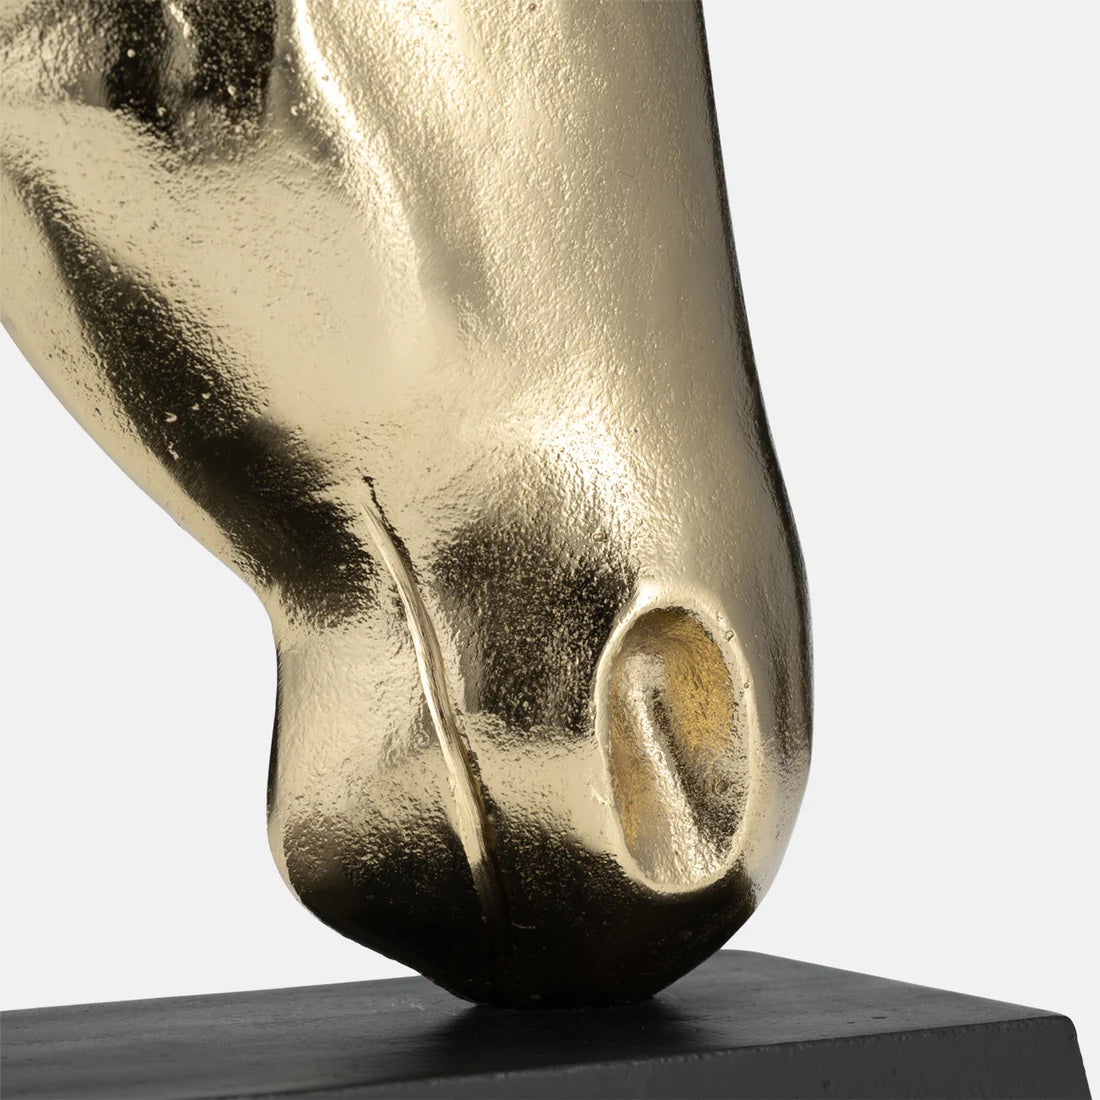 24" Horse Metal Head Sculpture,Black And Gold